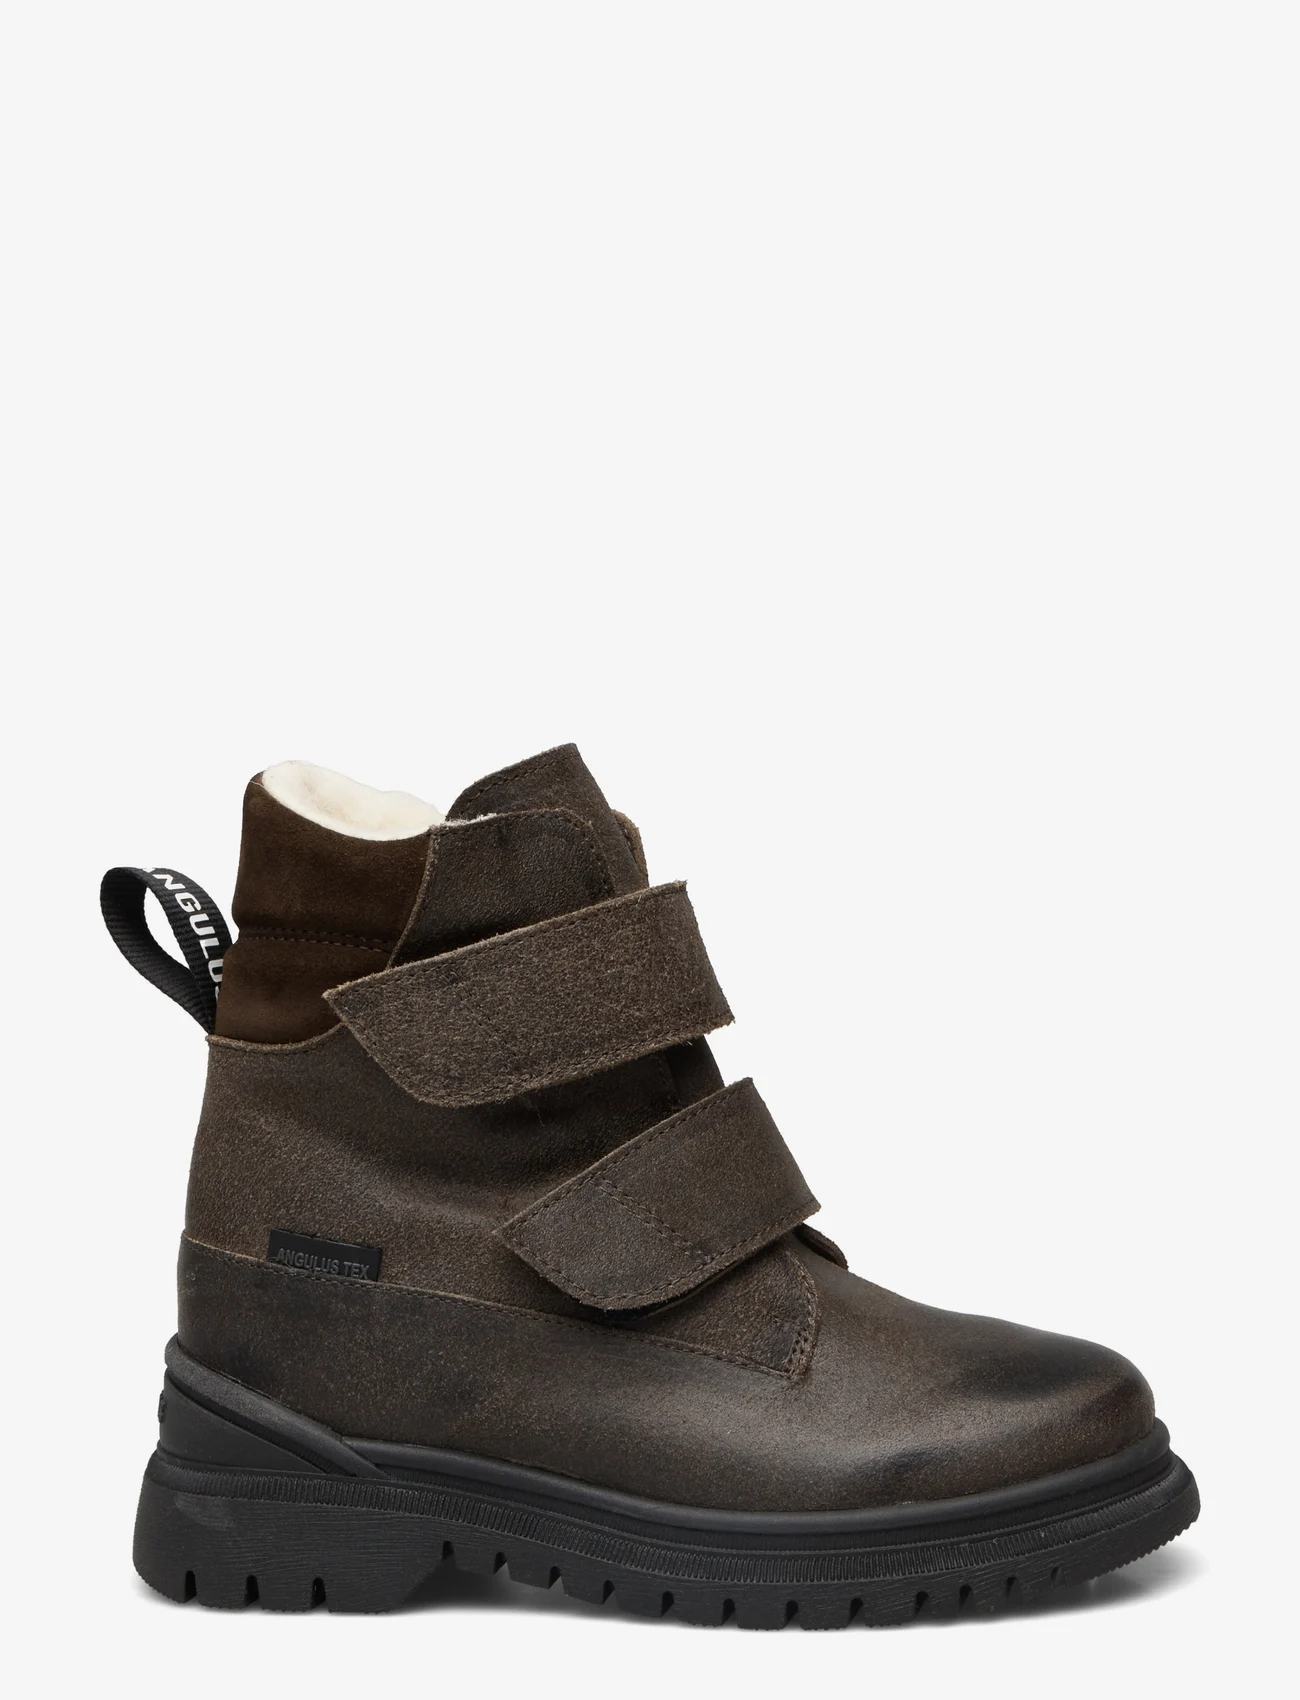 ANGULUS - Boots - flat - with velcro - lapsed - 2107/2214 dark olive - 1